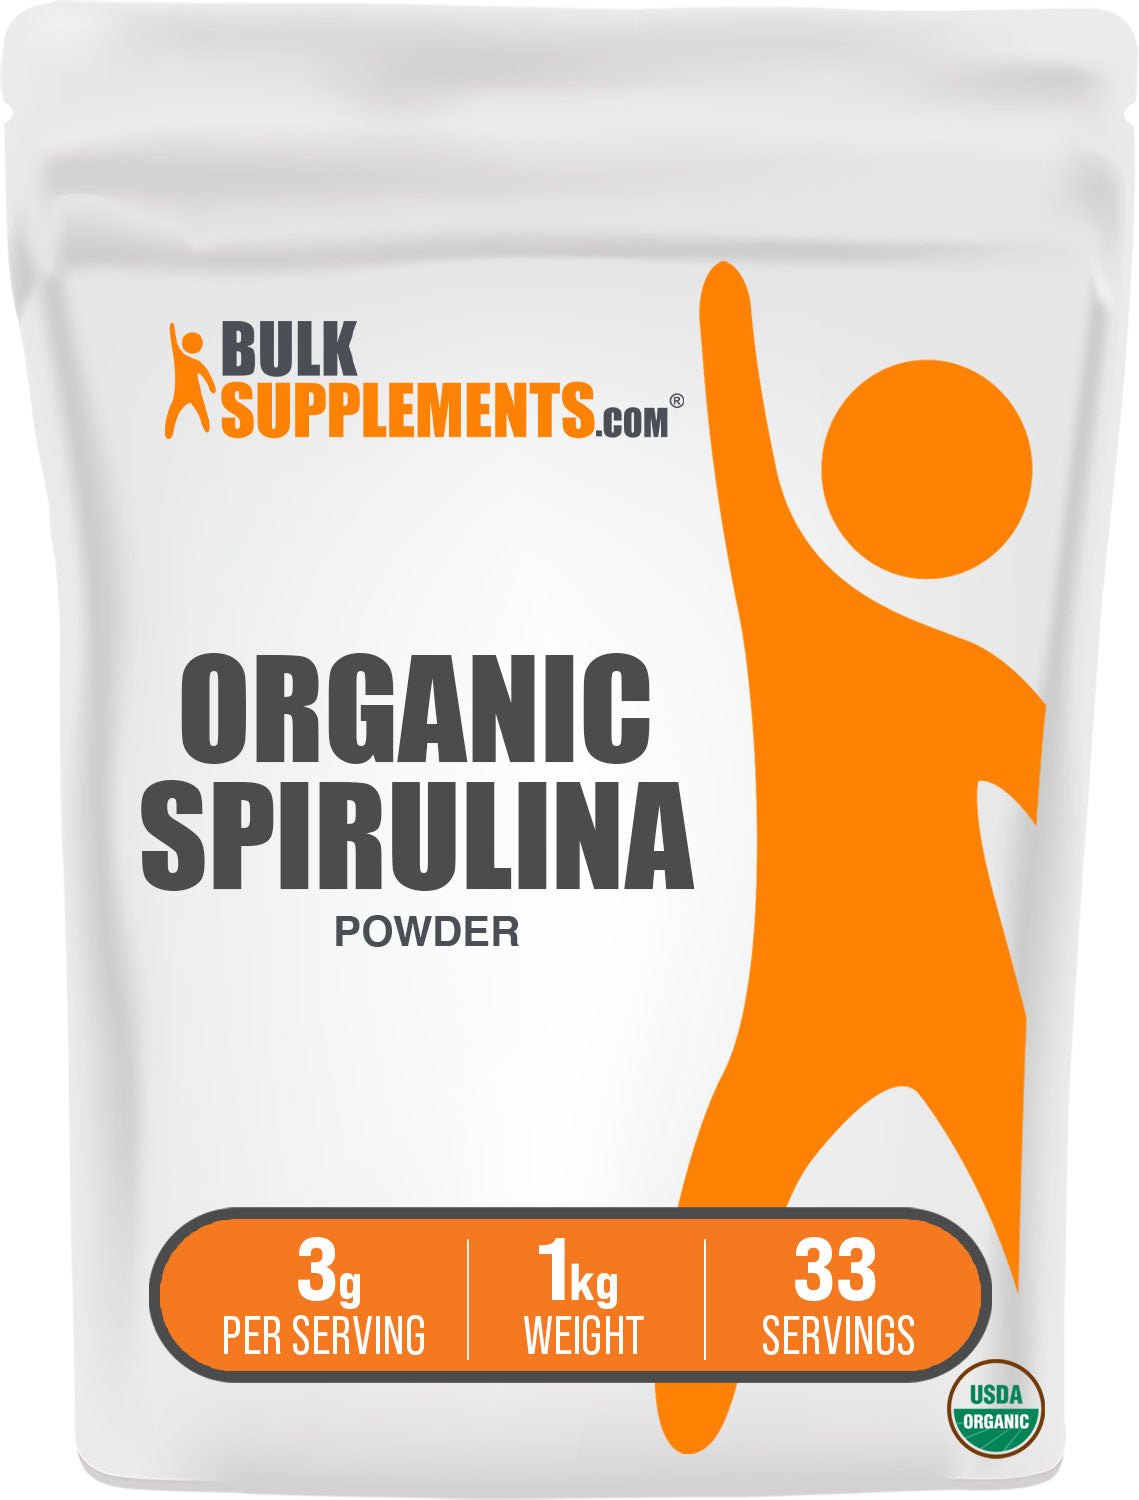 BulkSupplements.com Organic Spirulina Powder 1kg Bag